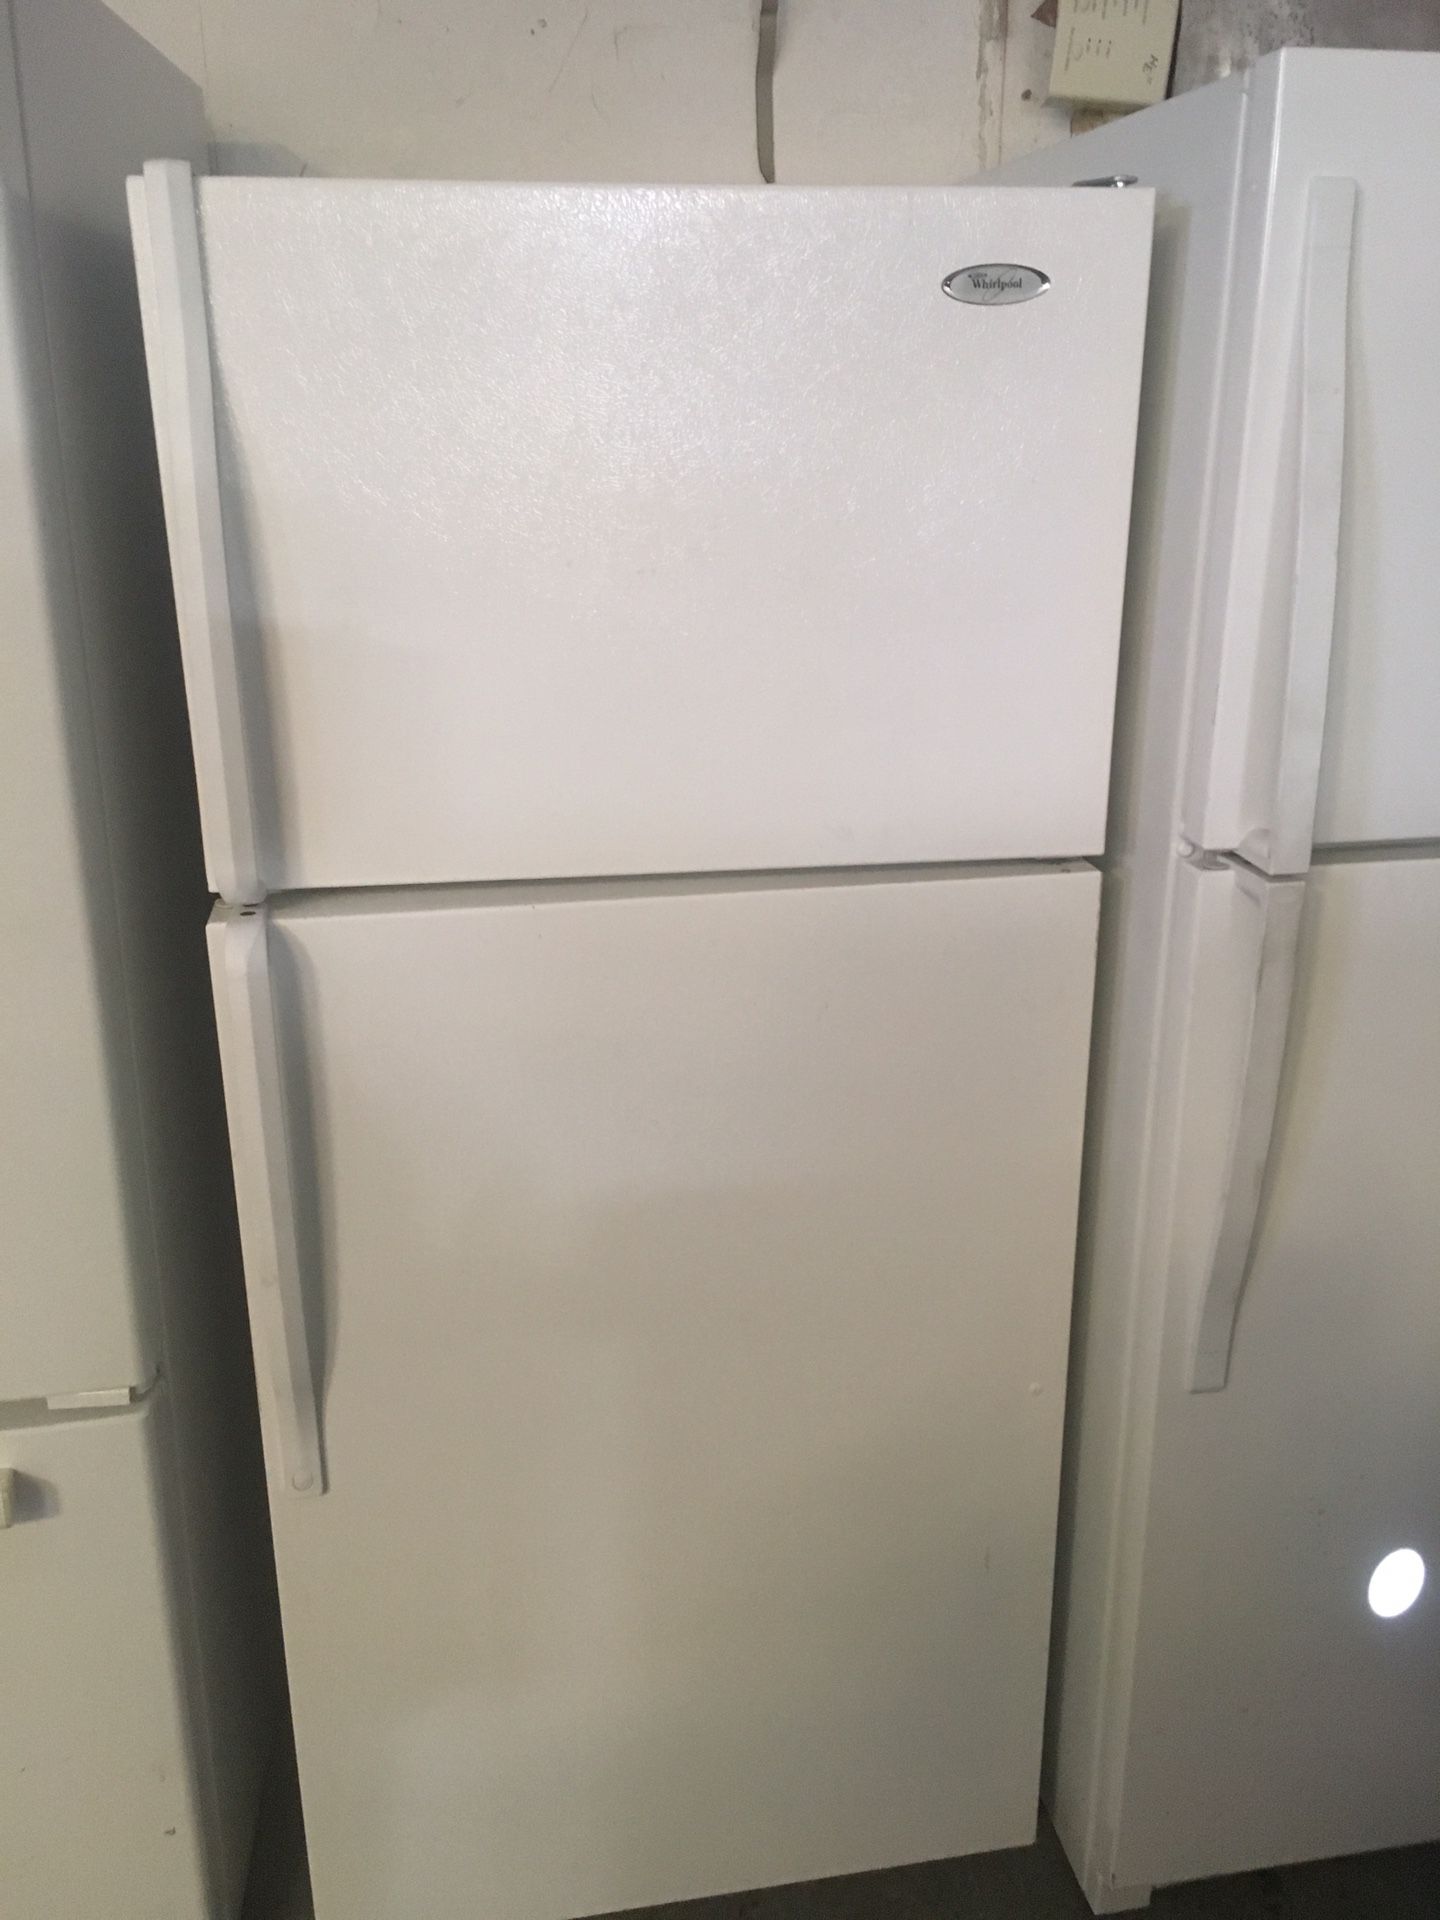 Refrigerator brand whirlpool everything is good working condition 60 days warranty